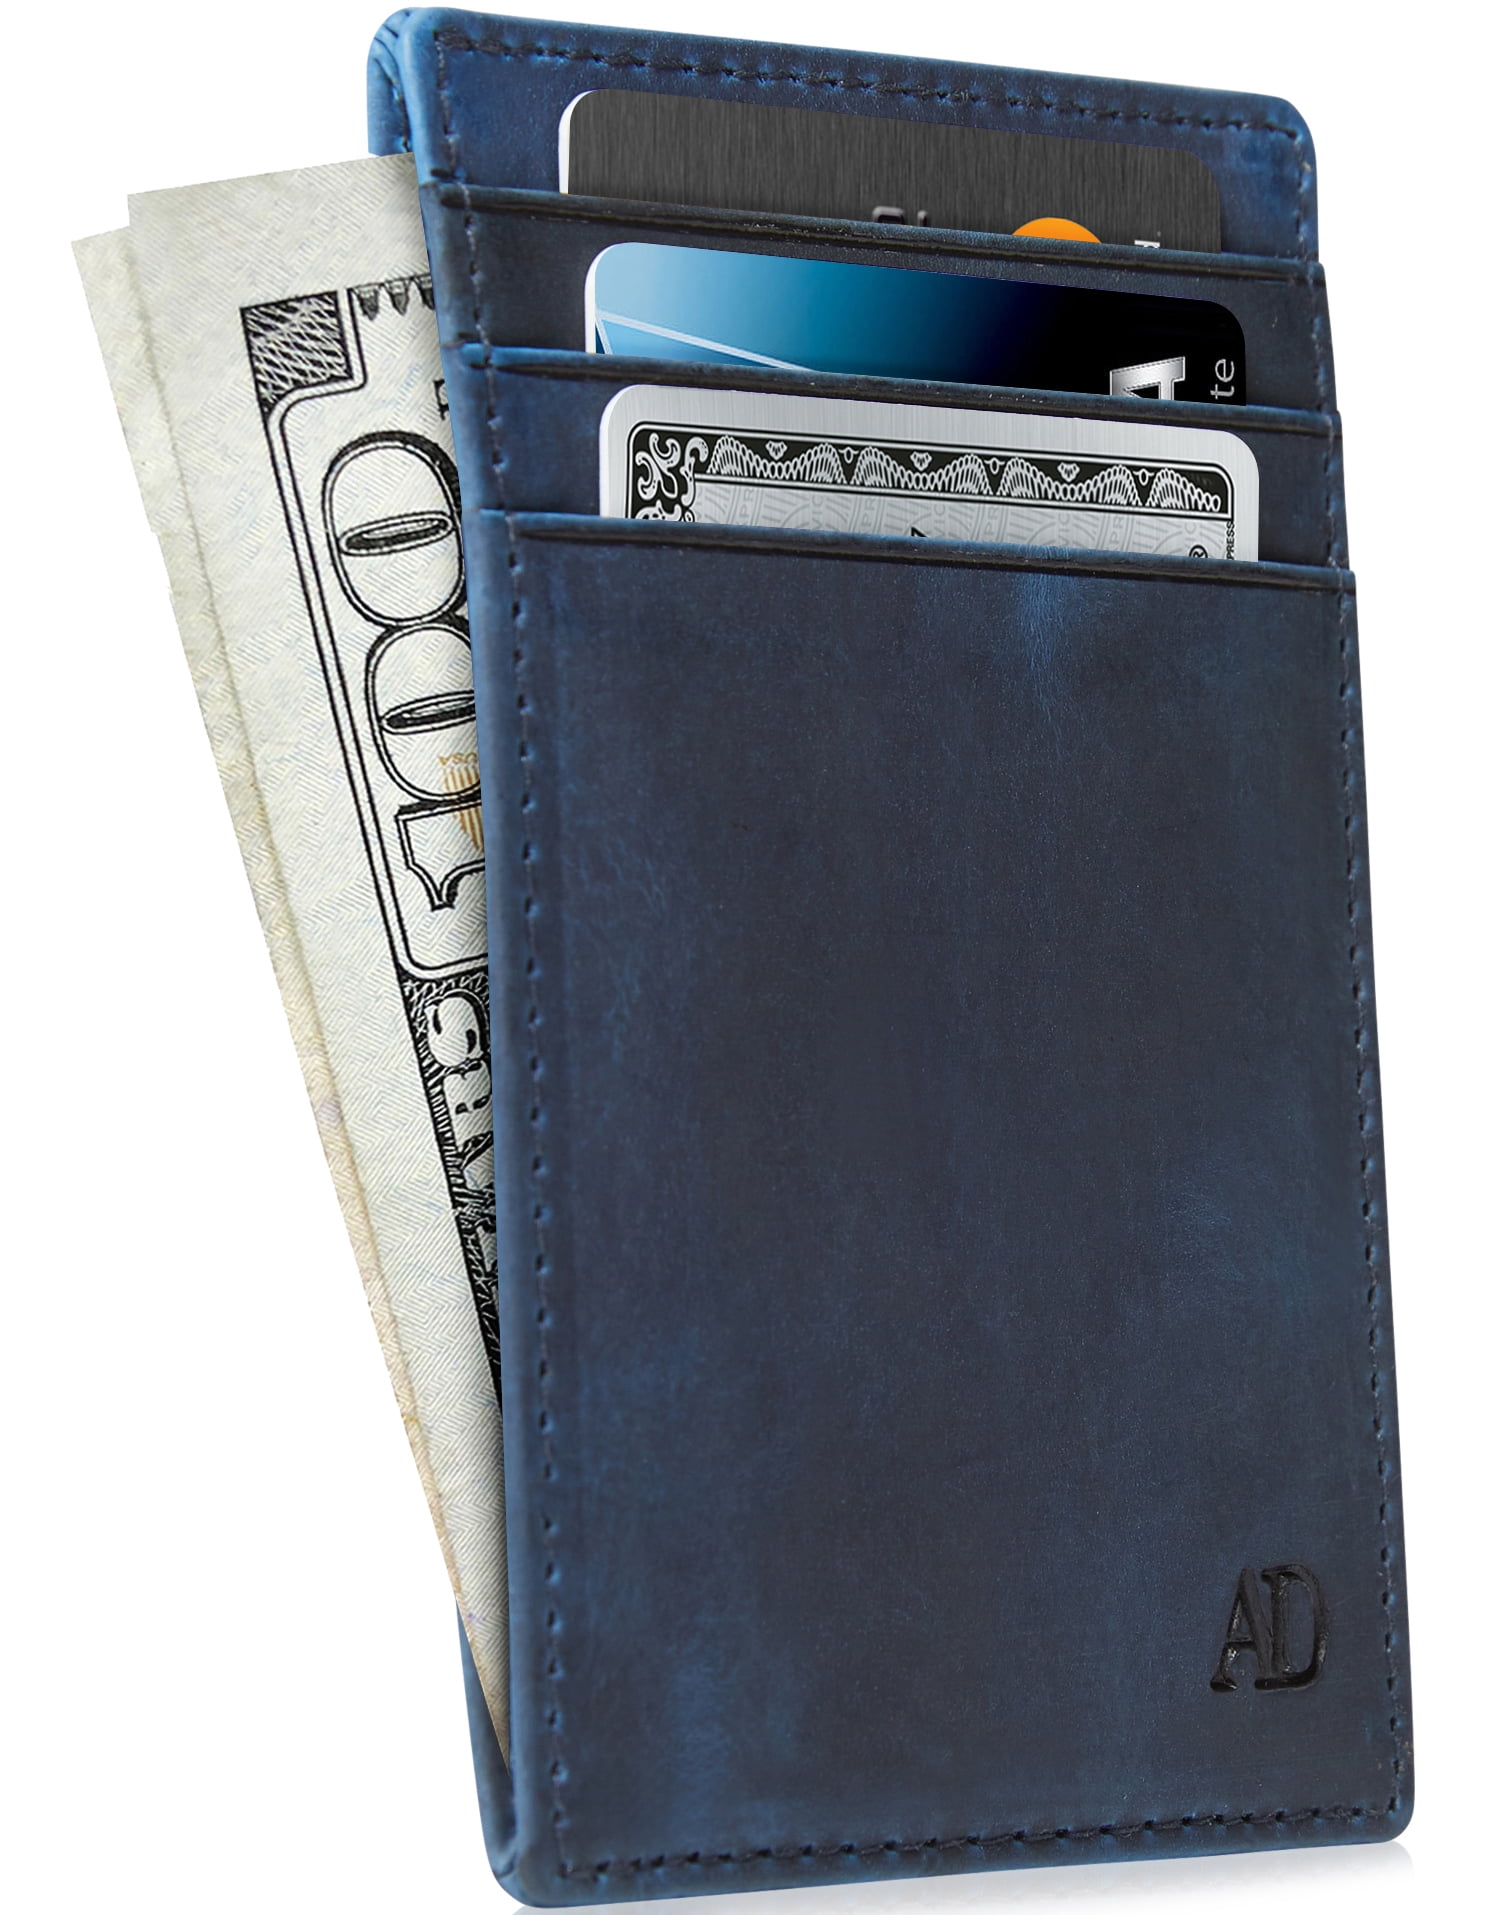 Slim Minimalist Wallets For Men & Women - Genuine Leather Credit Card ...